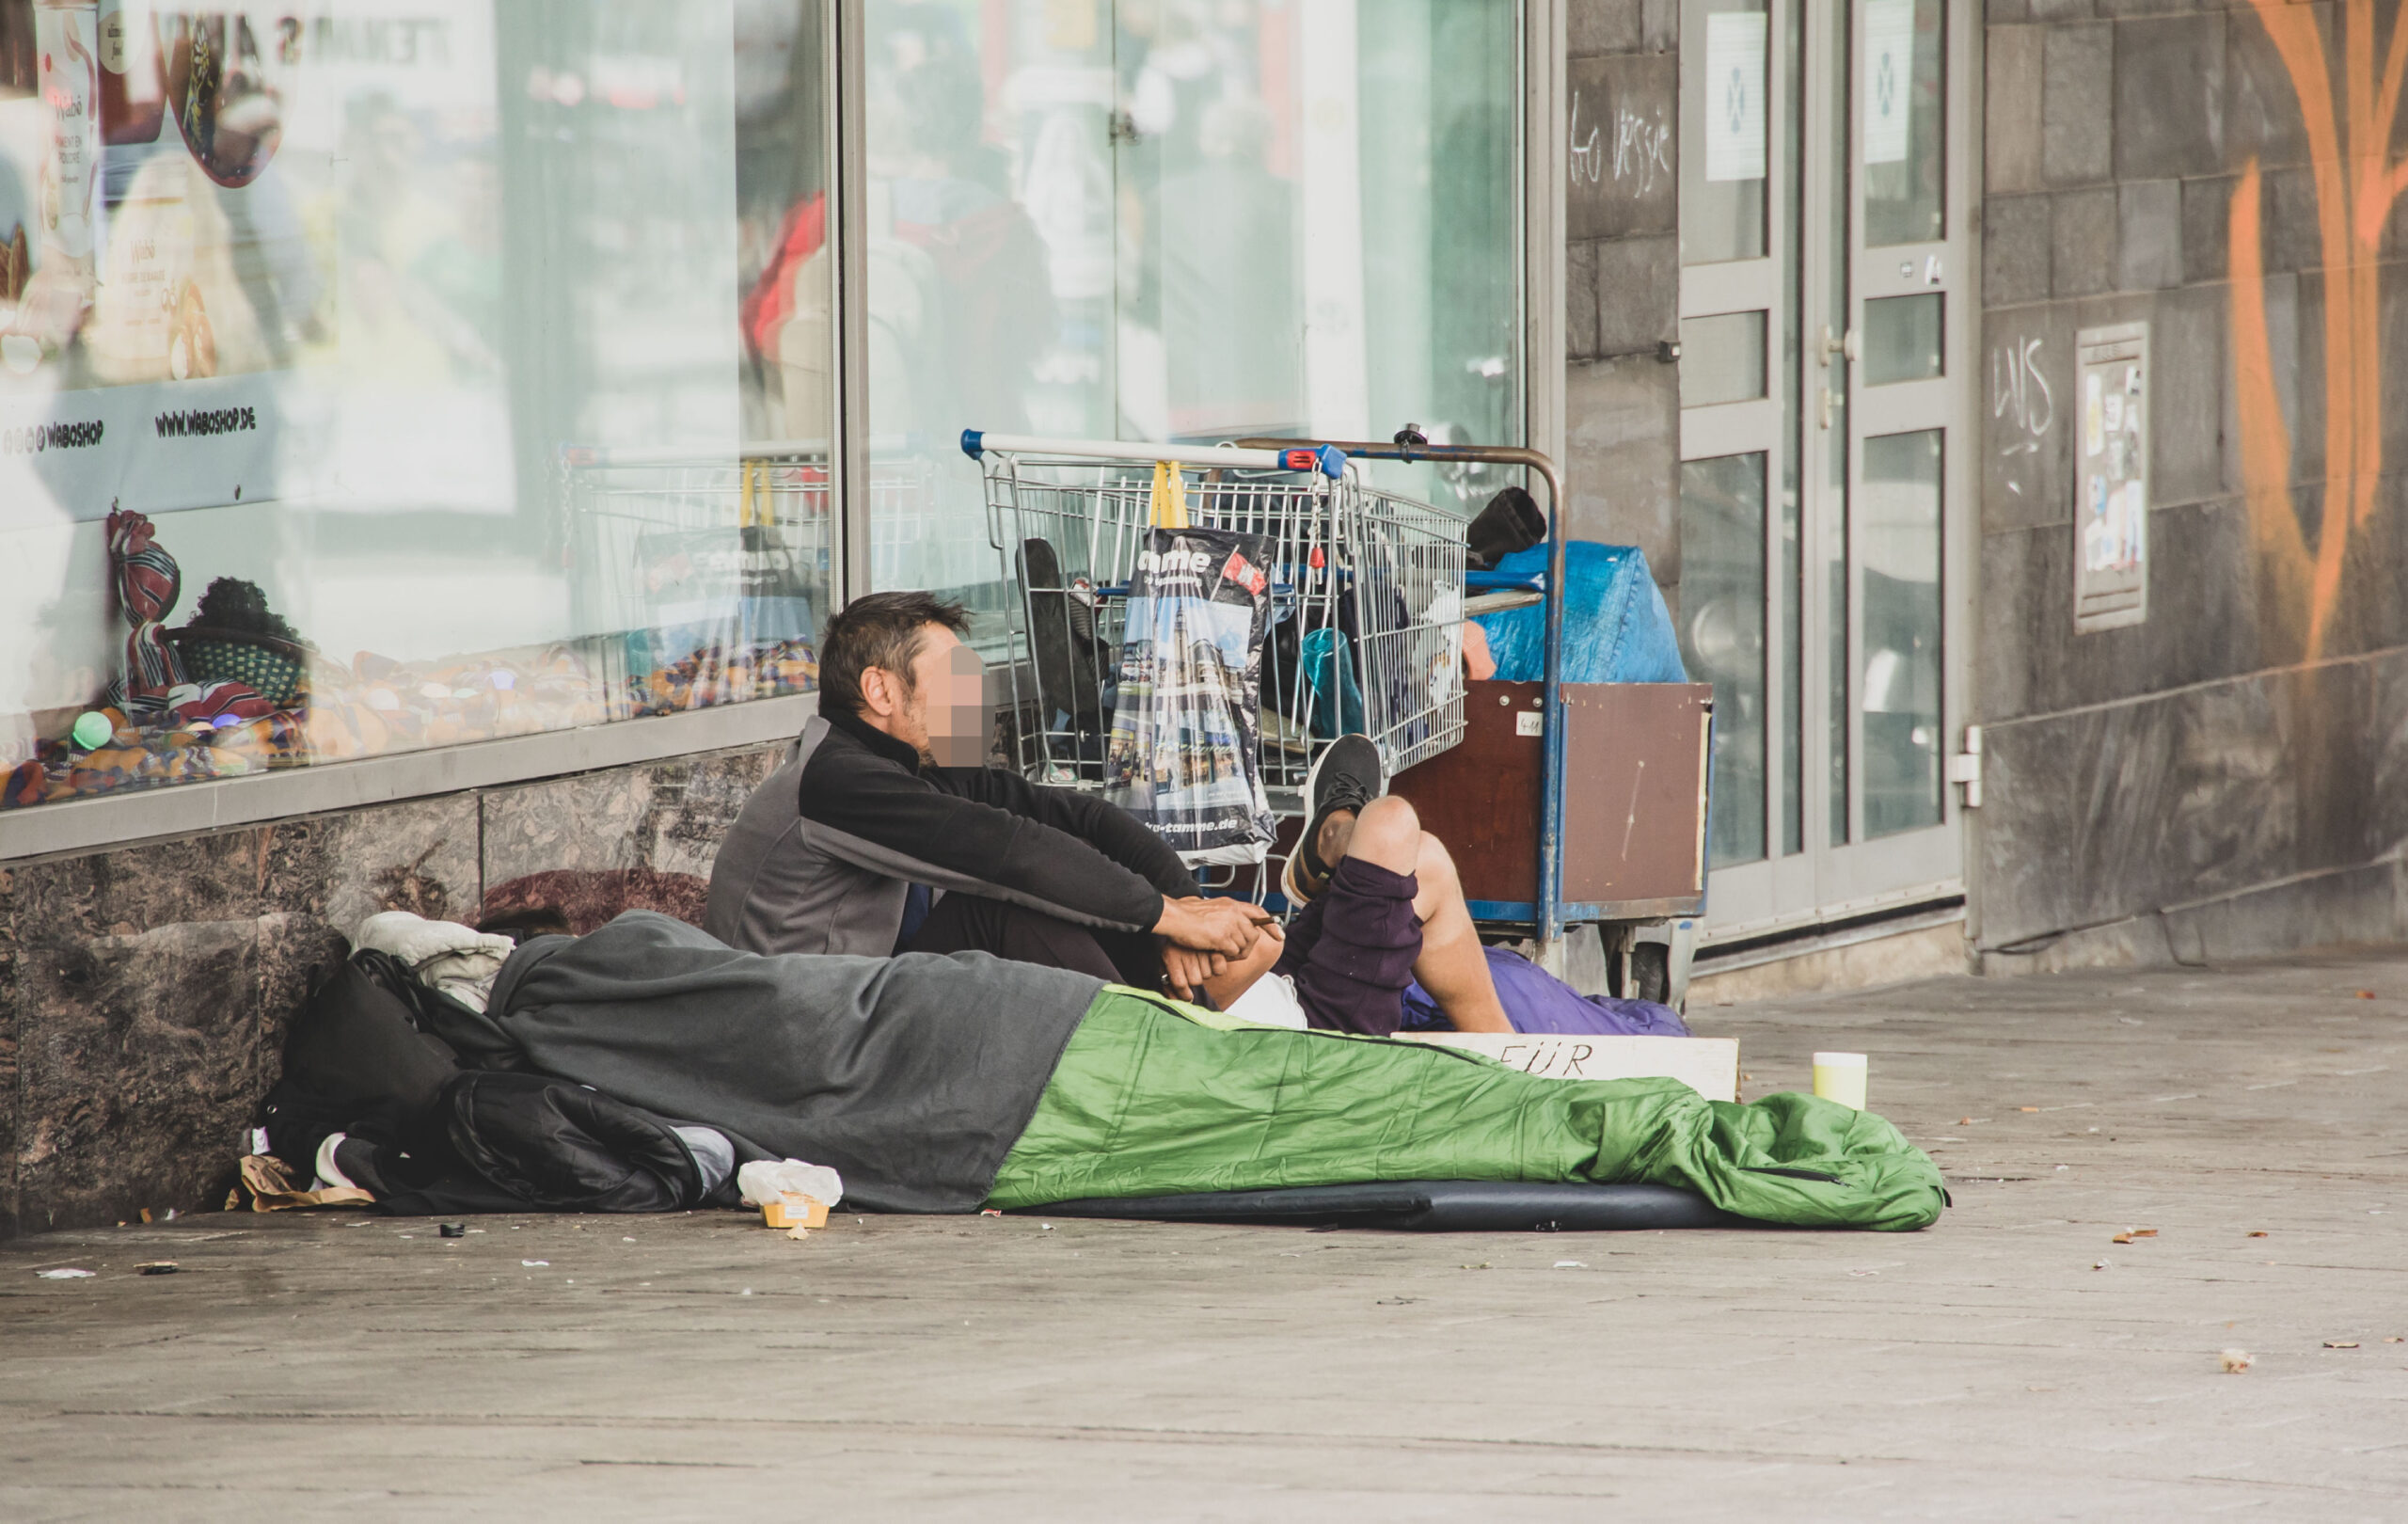 Obdachlose am Hamburger Hauptbahnhof